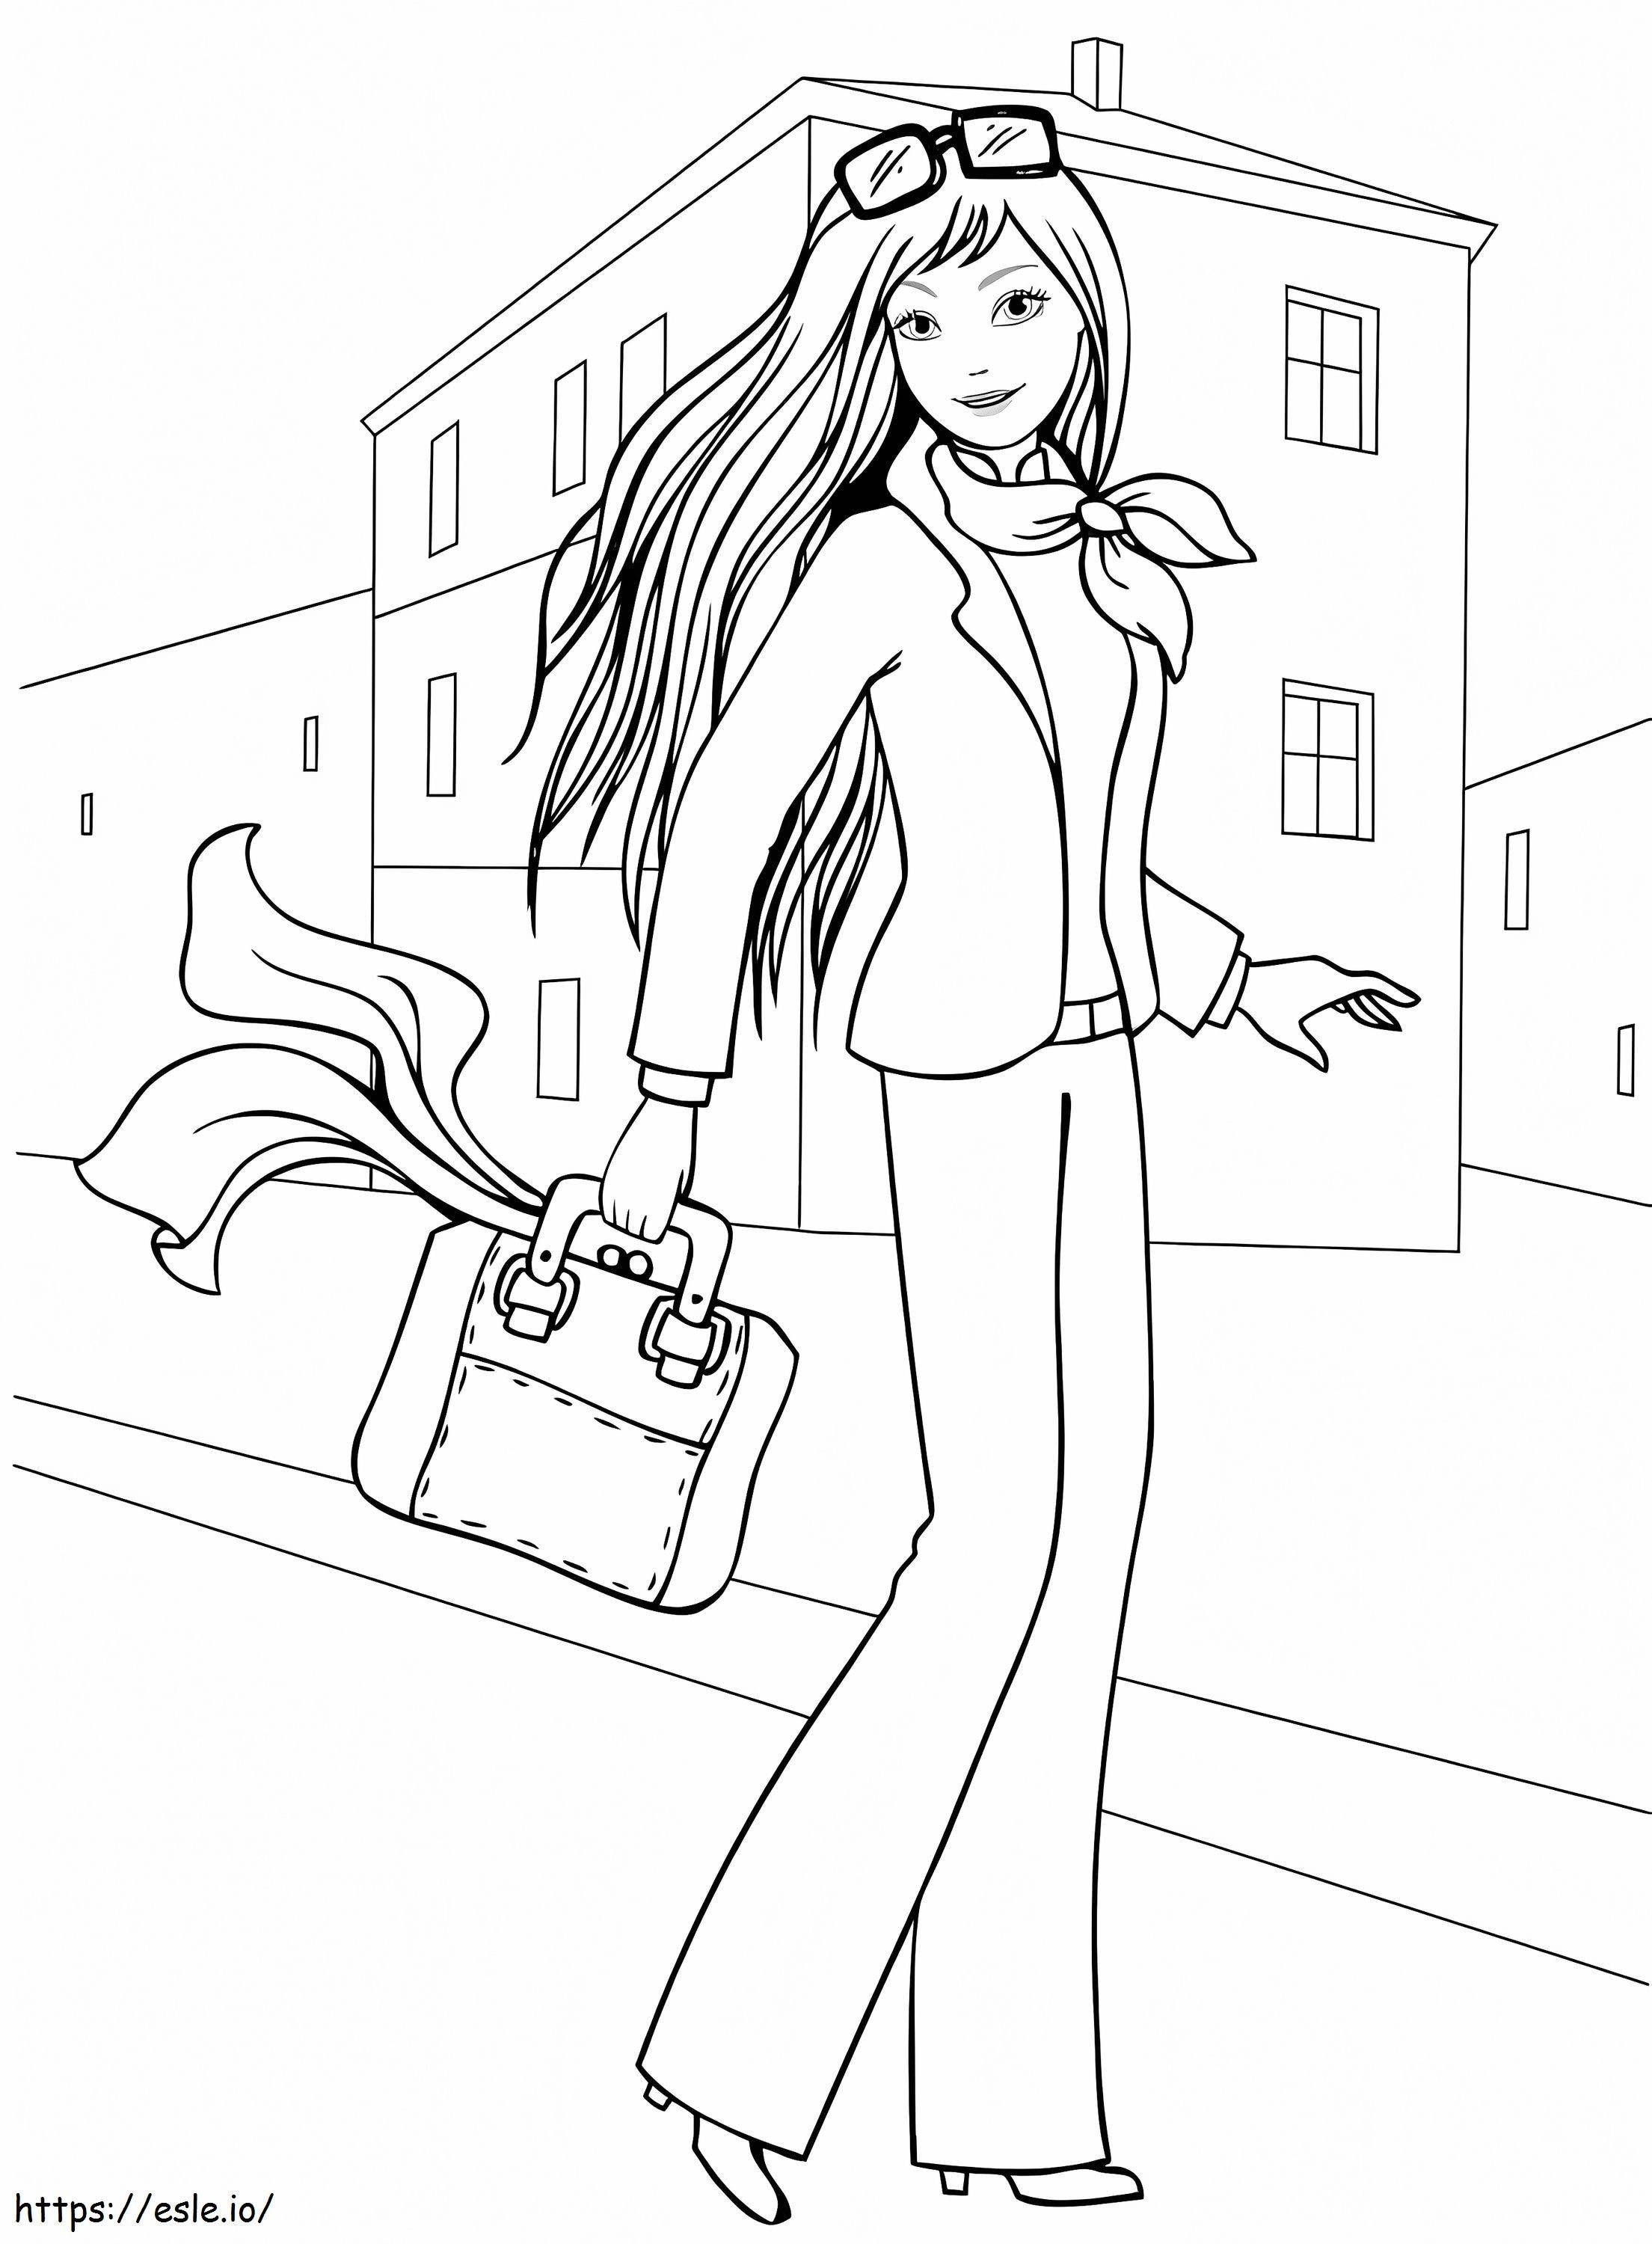 Girl With A Handbag coloring page